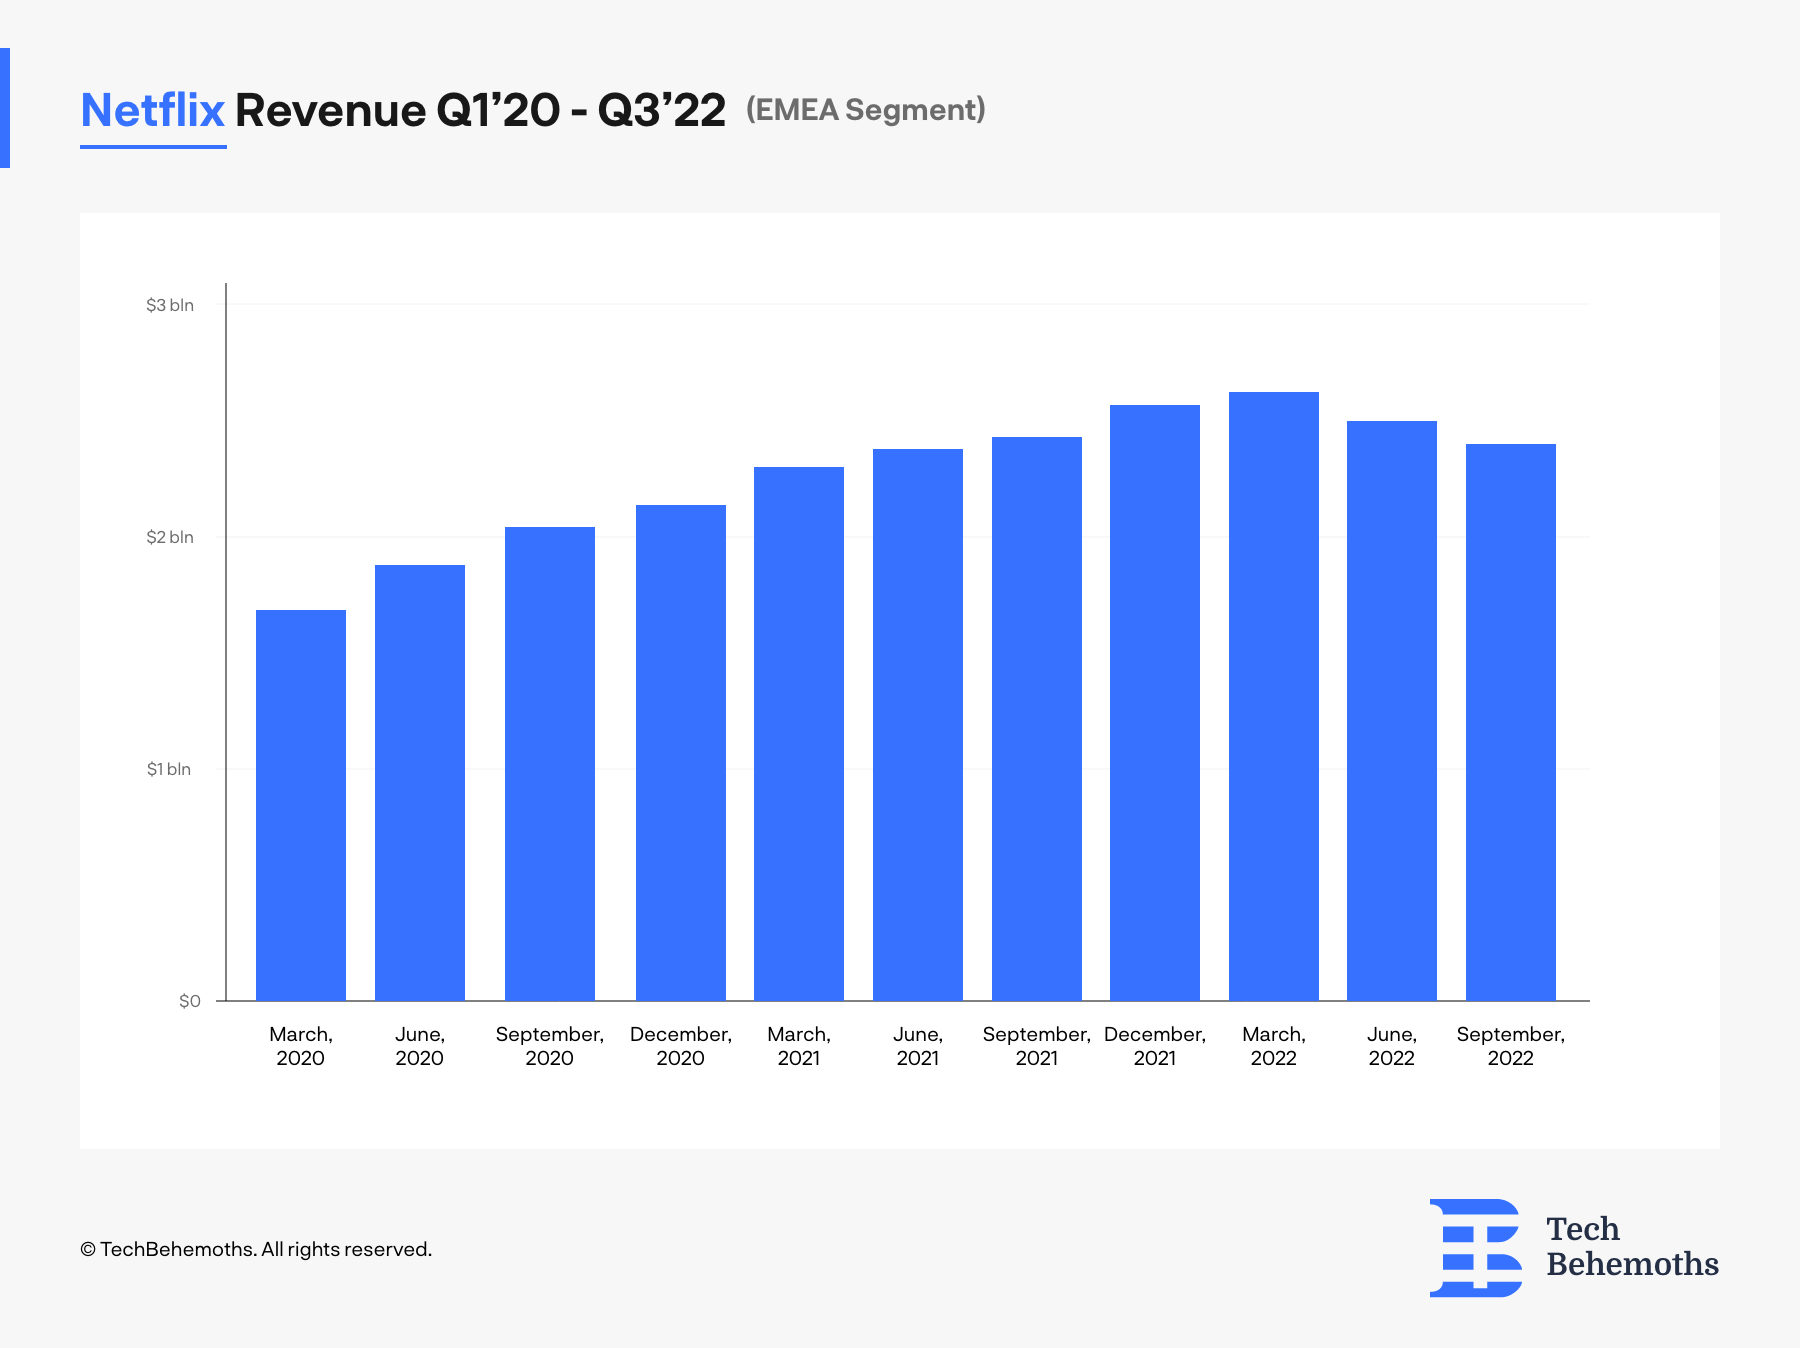 netflix revenue from the EMEA region, Januay 2020 - September 2022